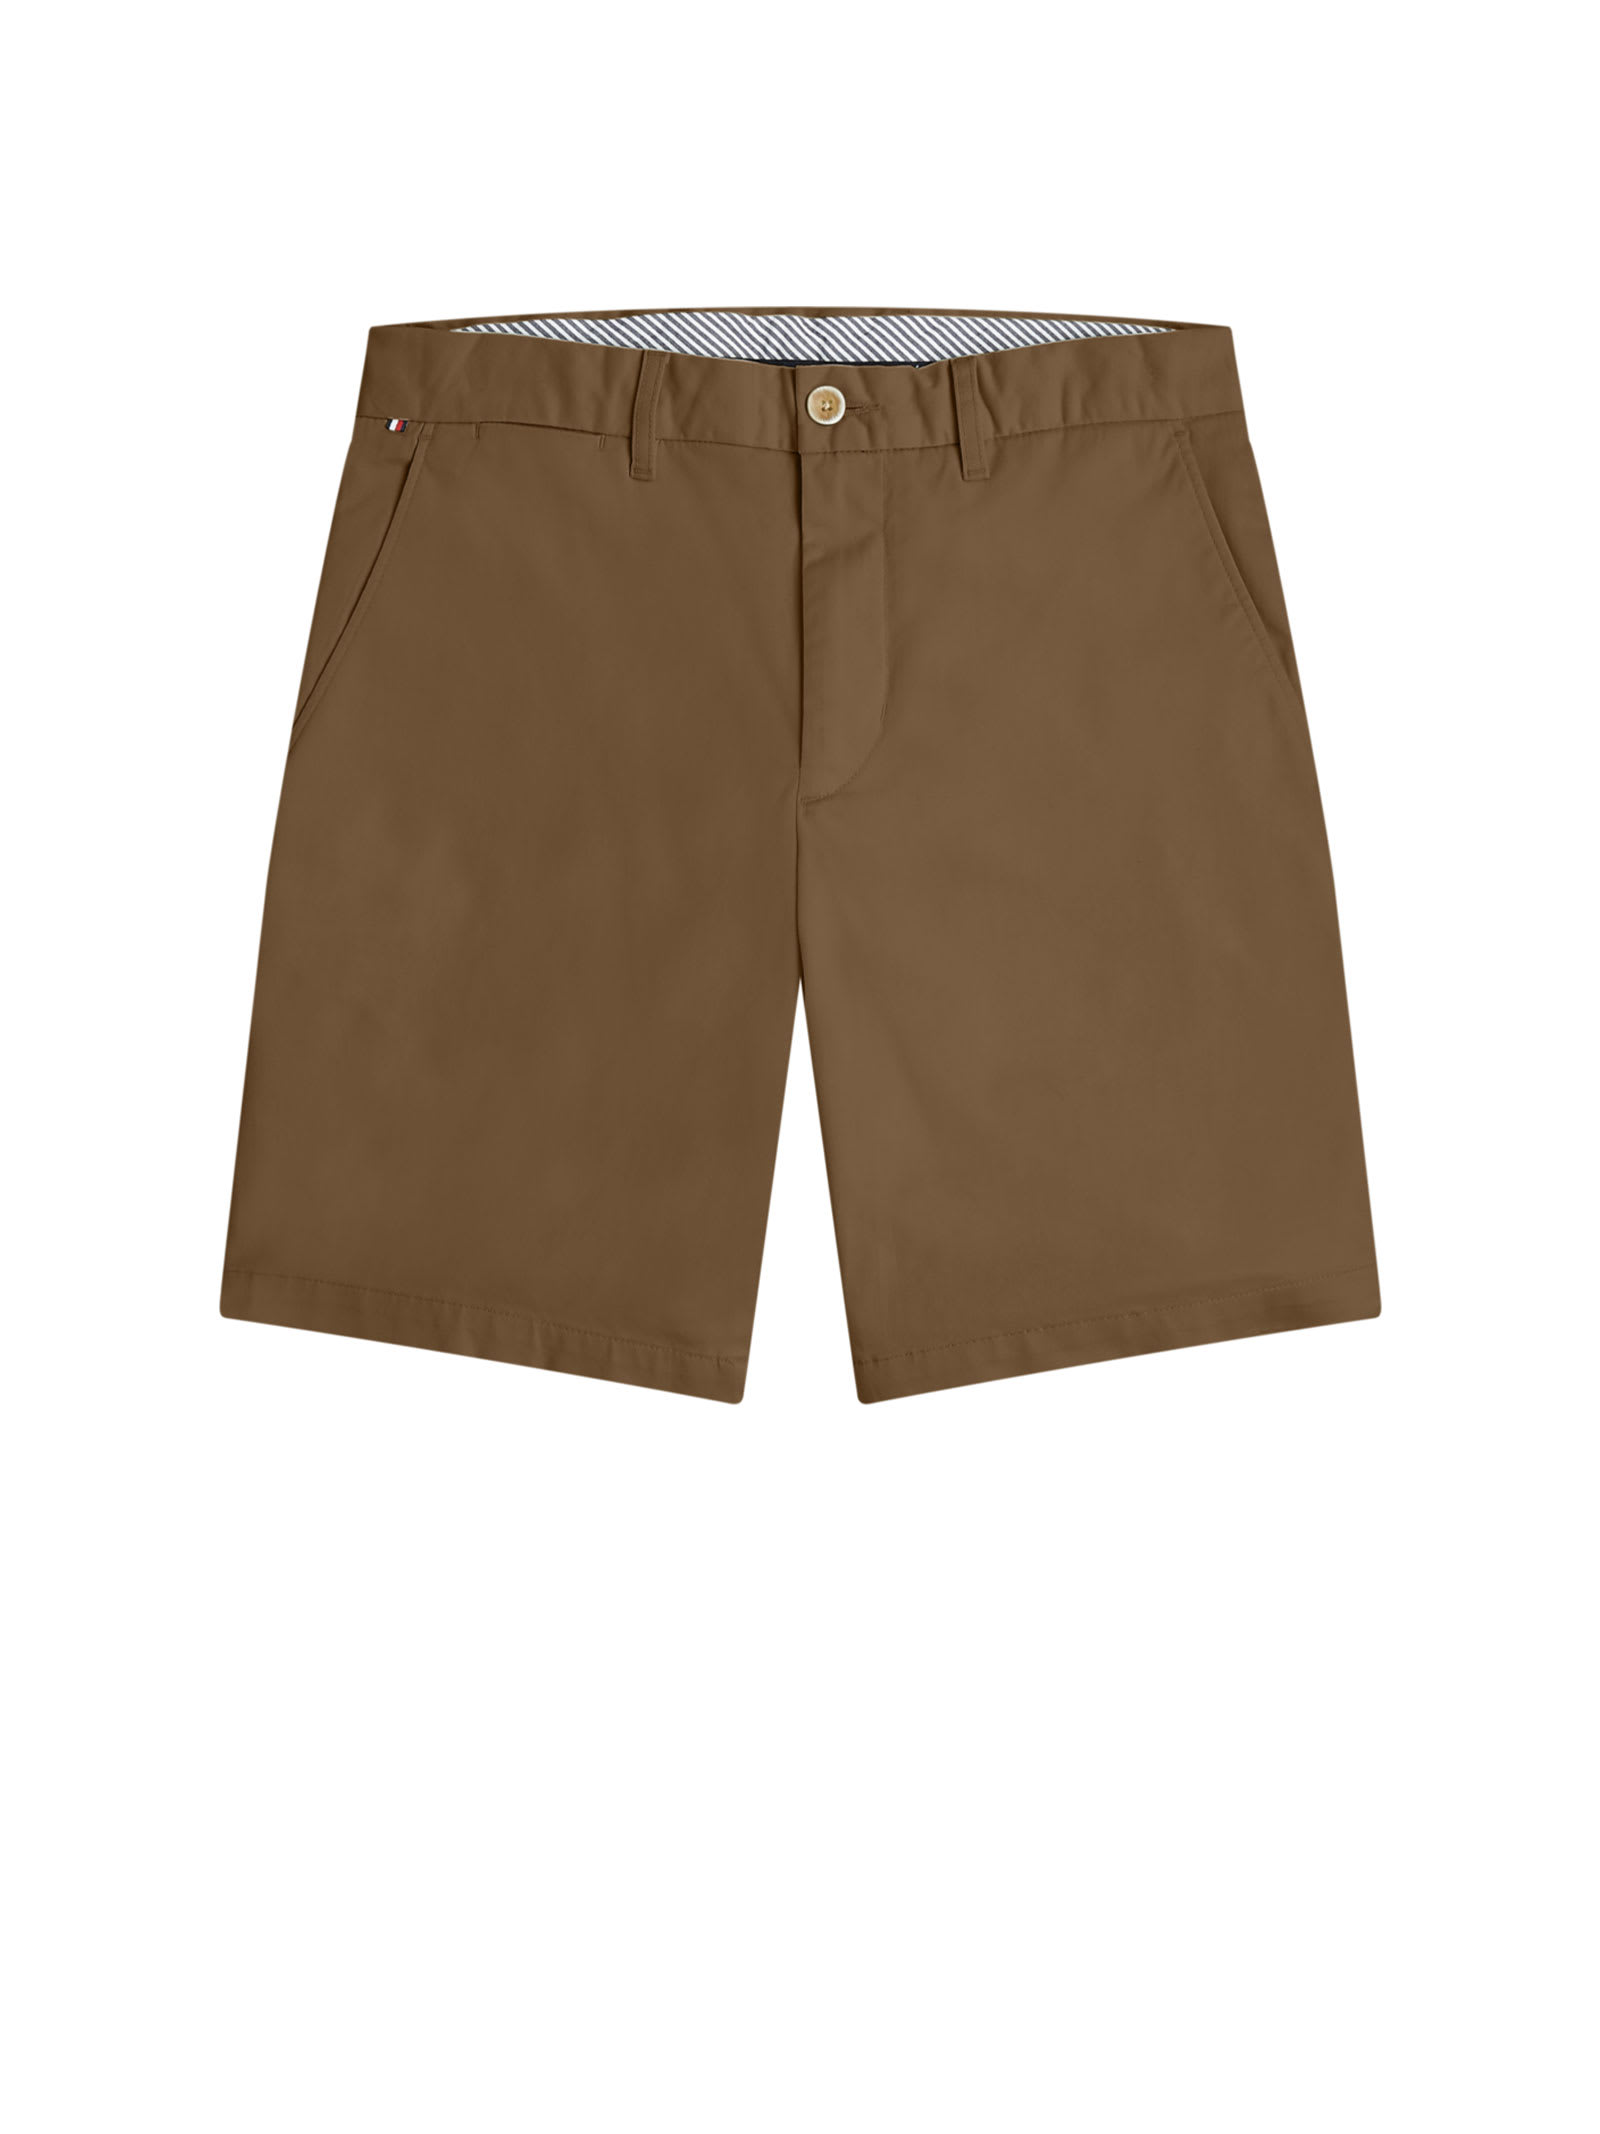 Tommy Hilfiger Brown Cotton Bermuda Shorts